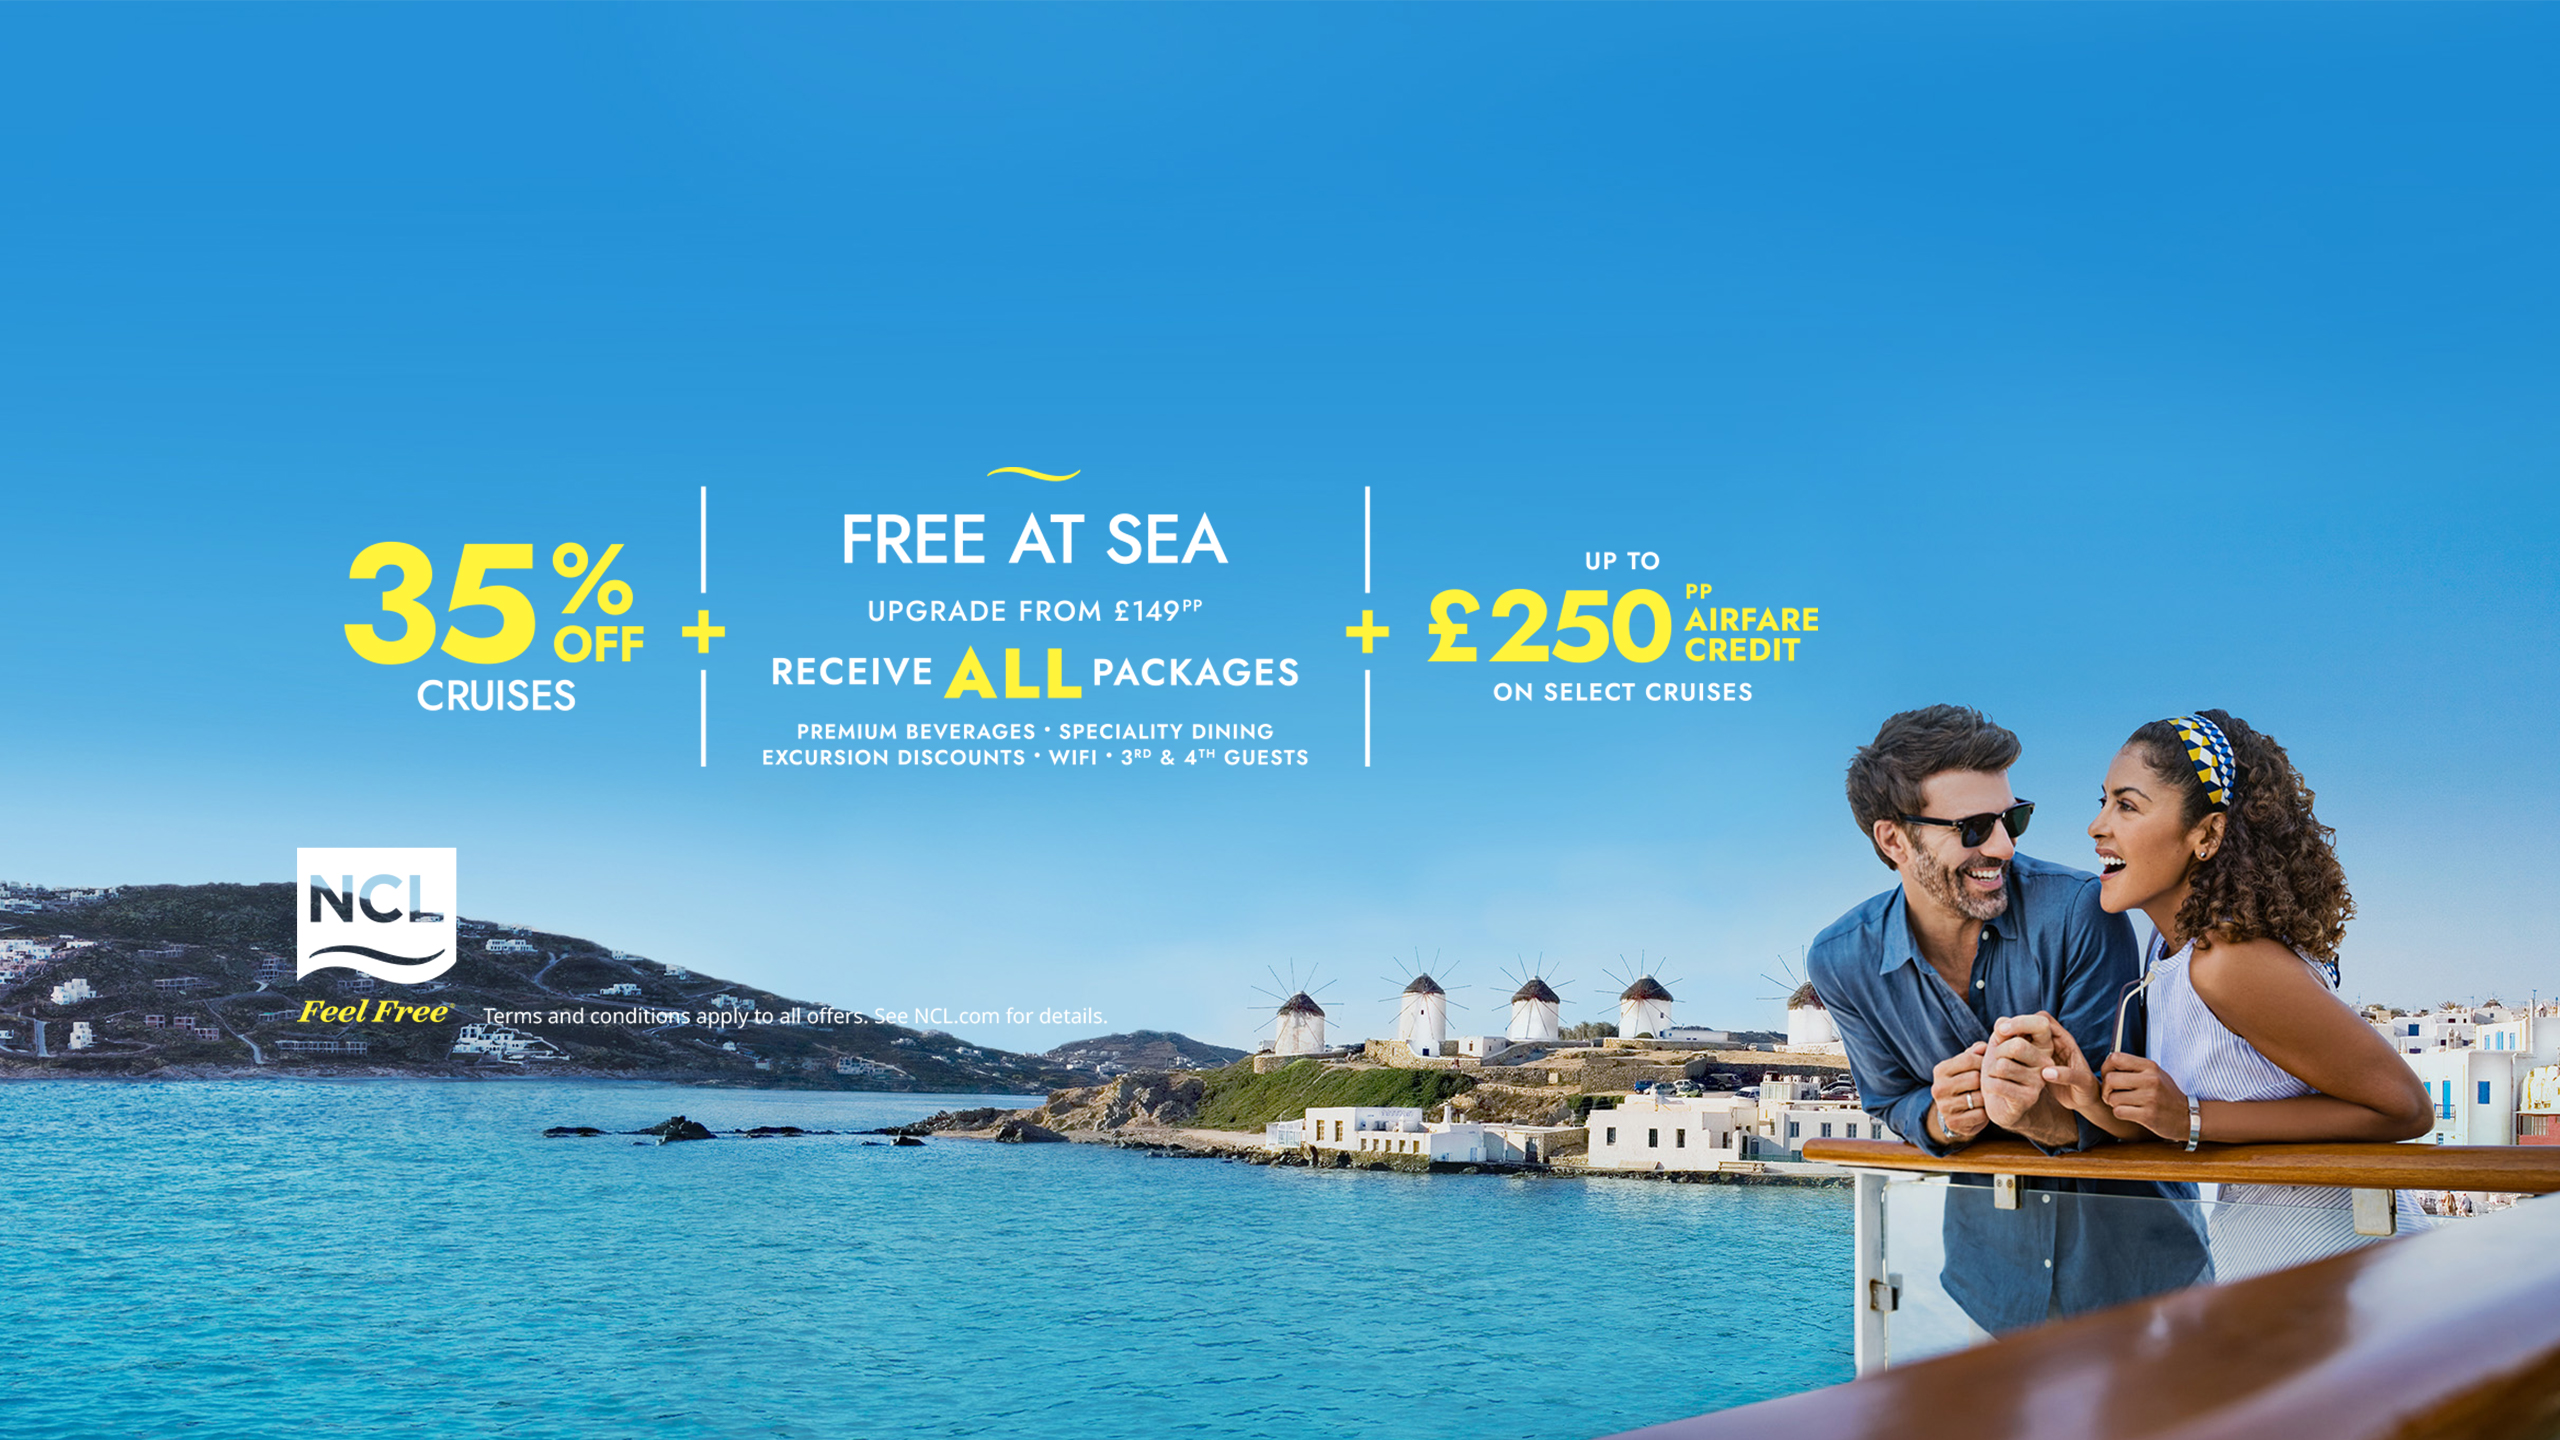 Norwegian Cruise Line – Free at Sea - Vision Cruise